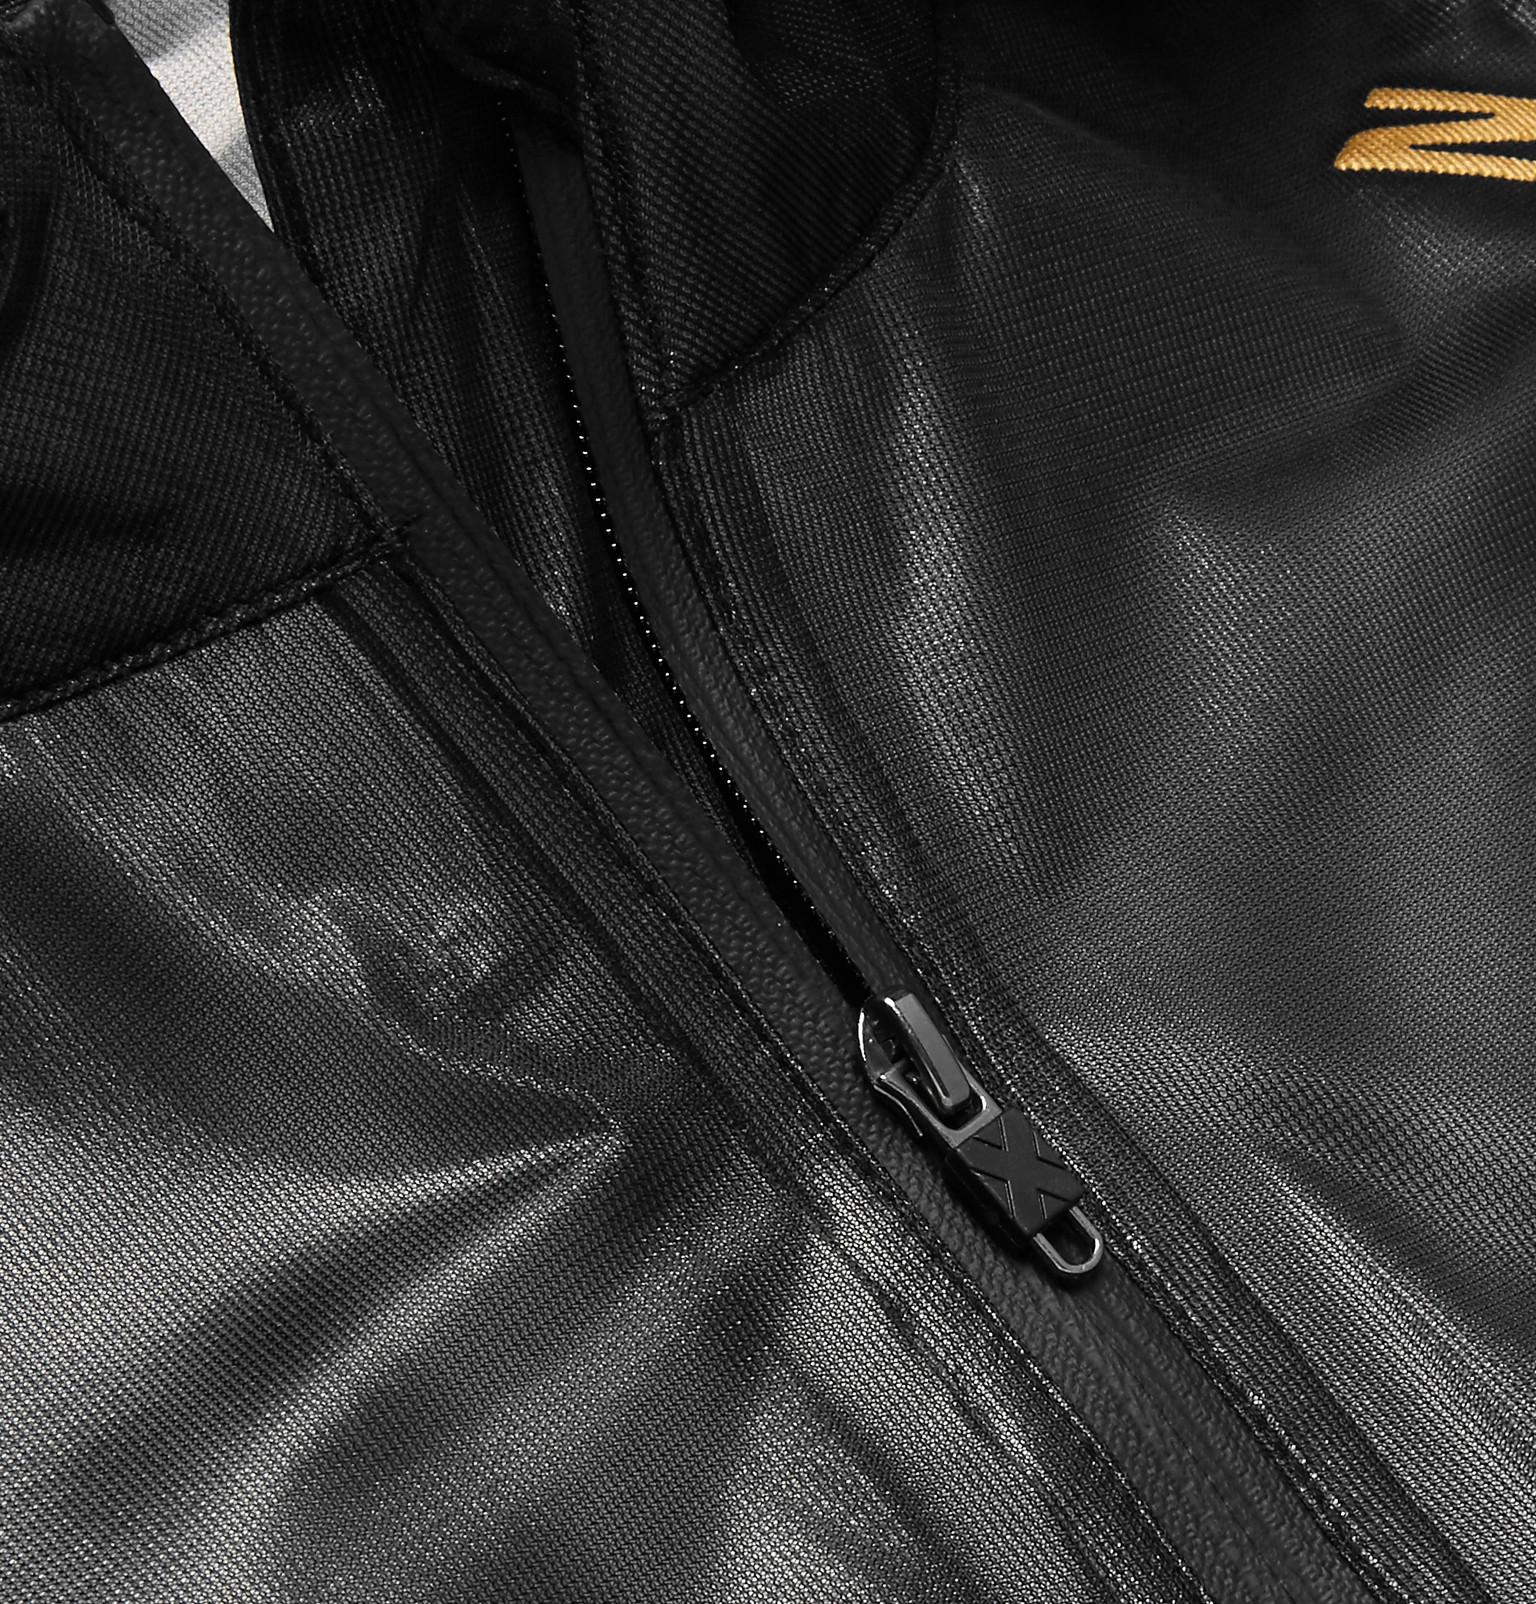 2XU Synthetic Ghst Membrane Shell Jacket in Black for Men - Lyst